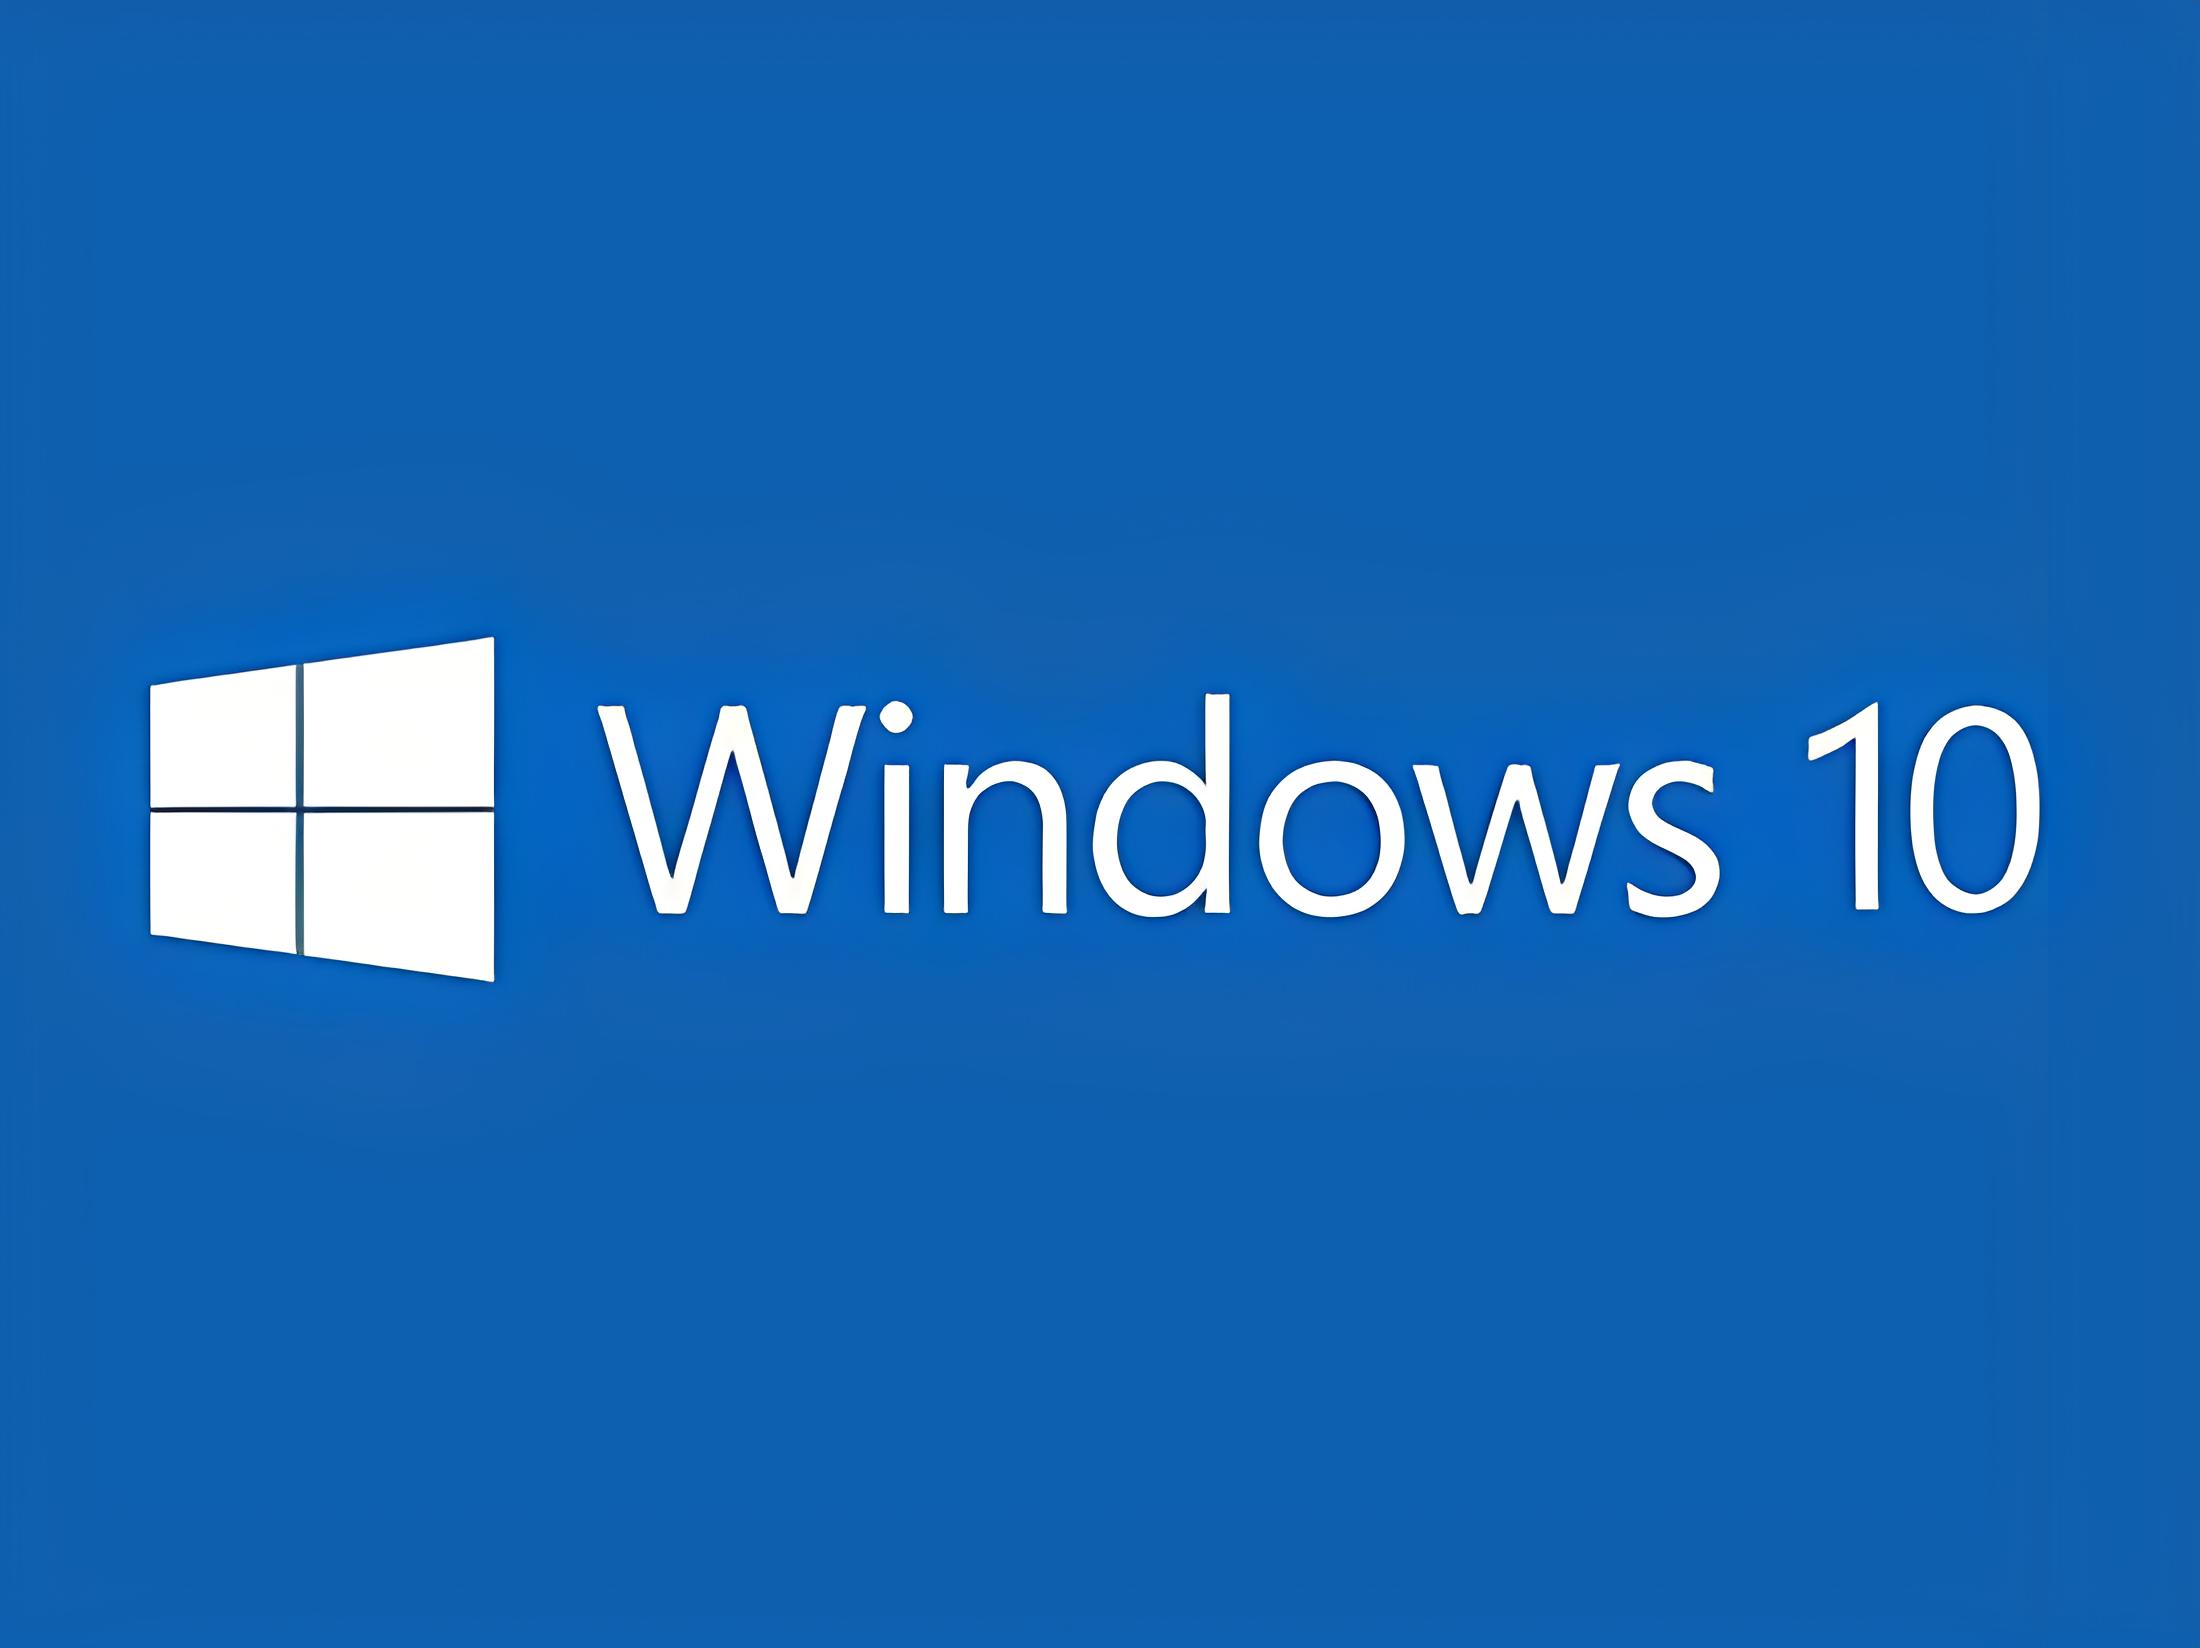 Windows 10 business editions(批量版)1909 (x64位)ISO系统镜像下载